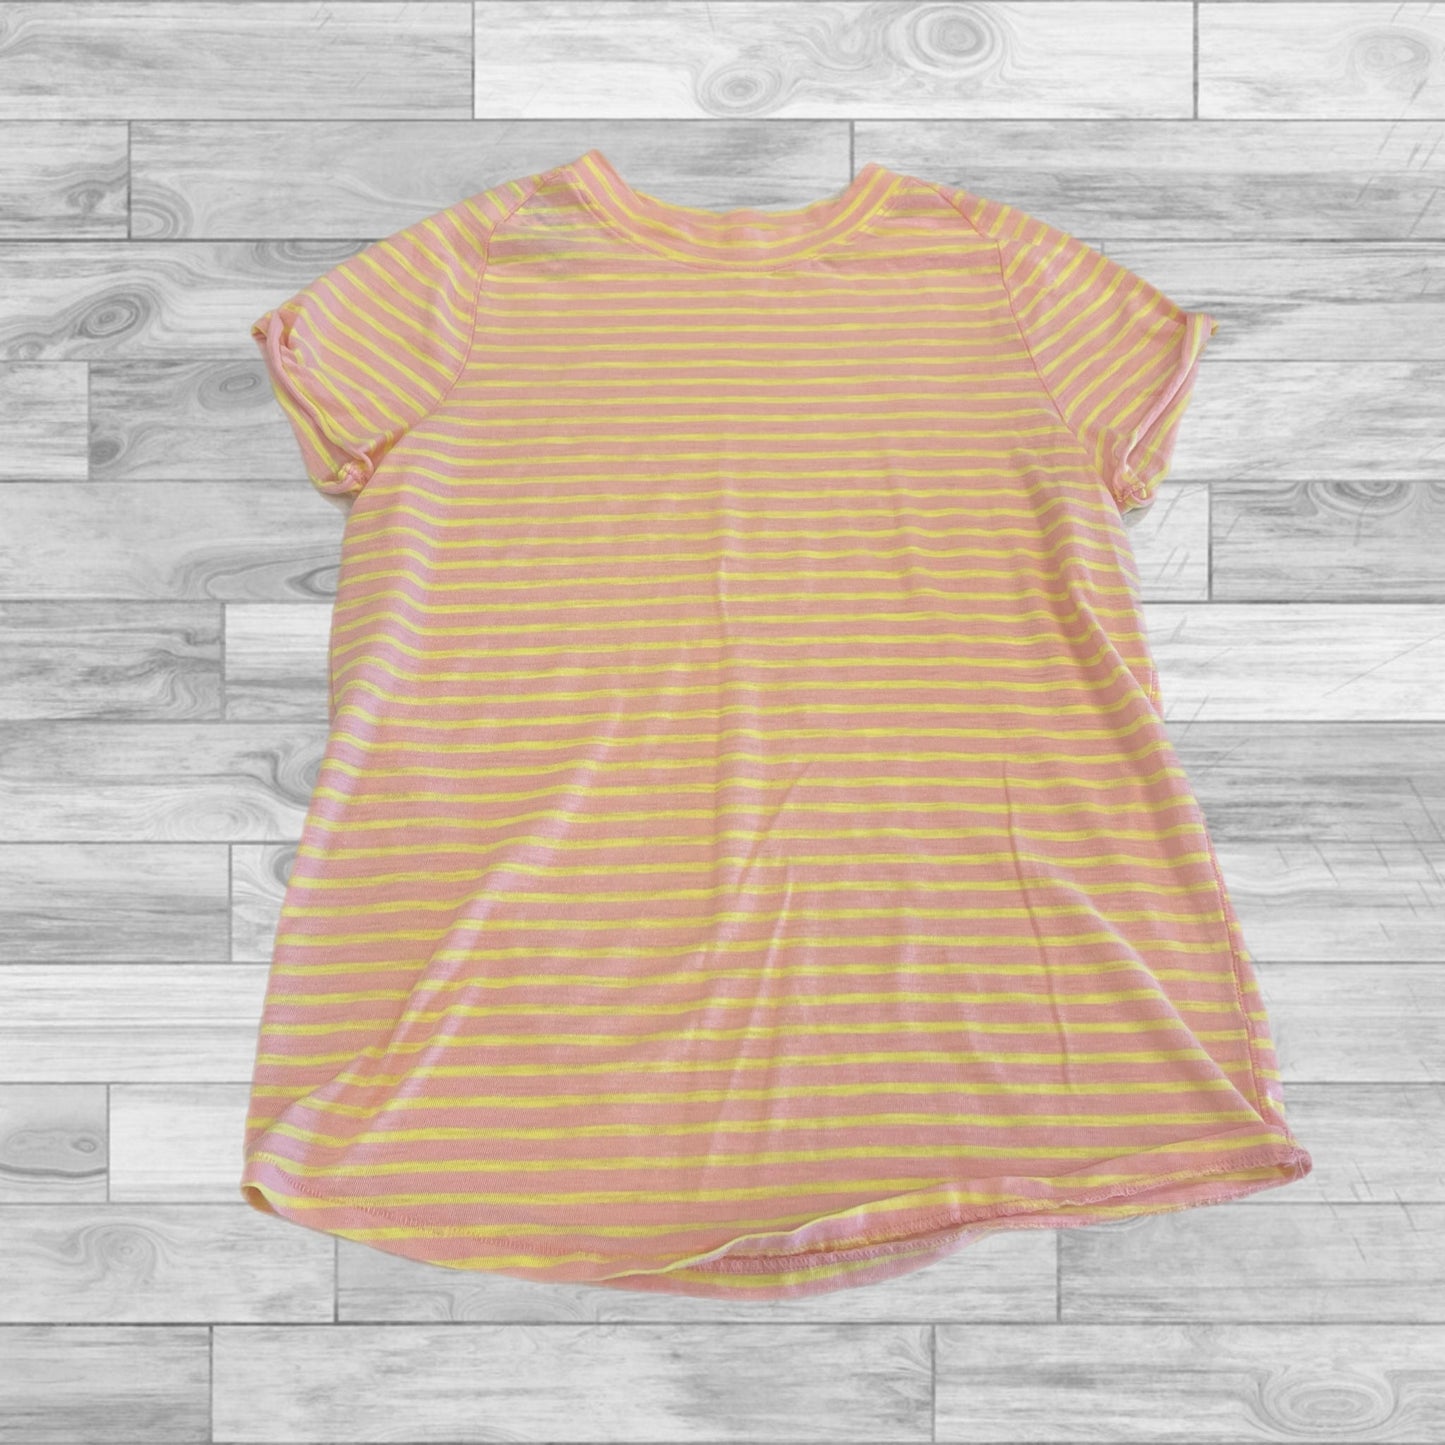 Orange & Yellow Top Short Sleeve Basic We The Free, Size L